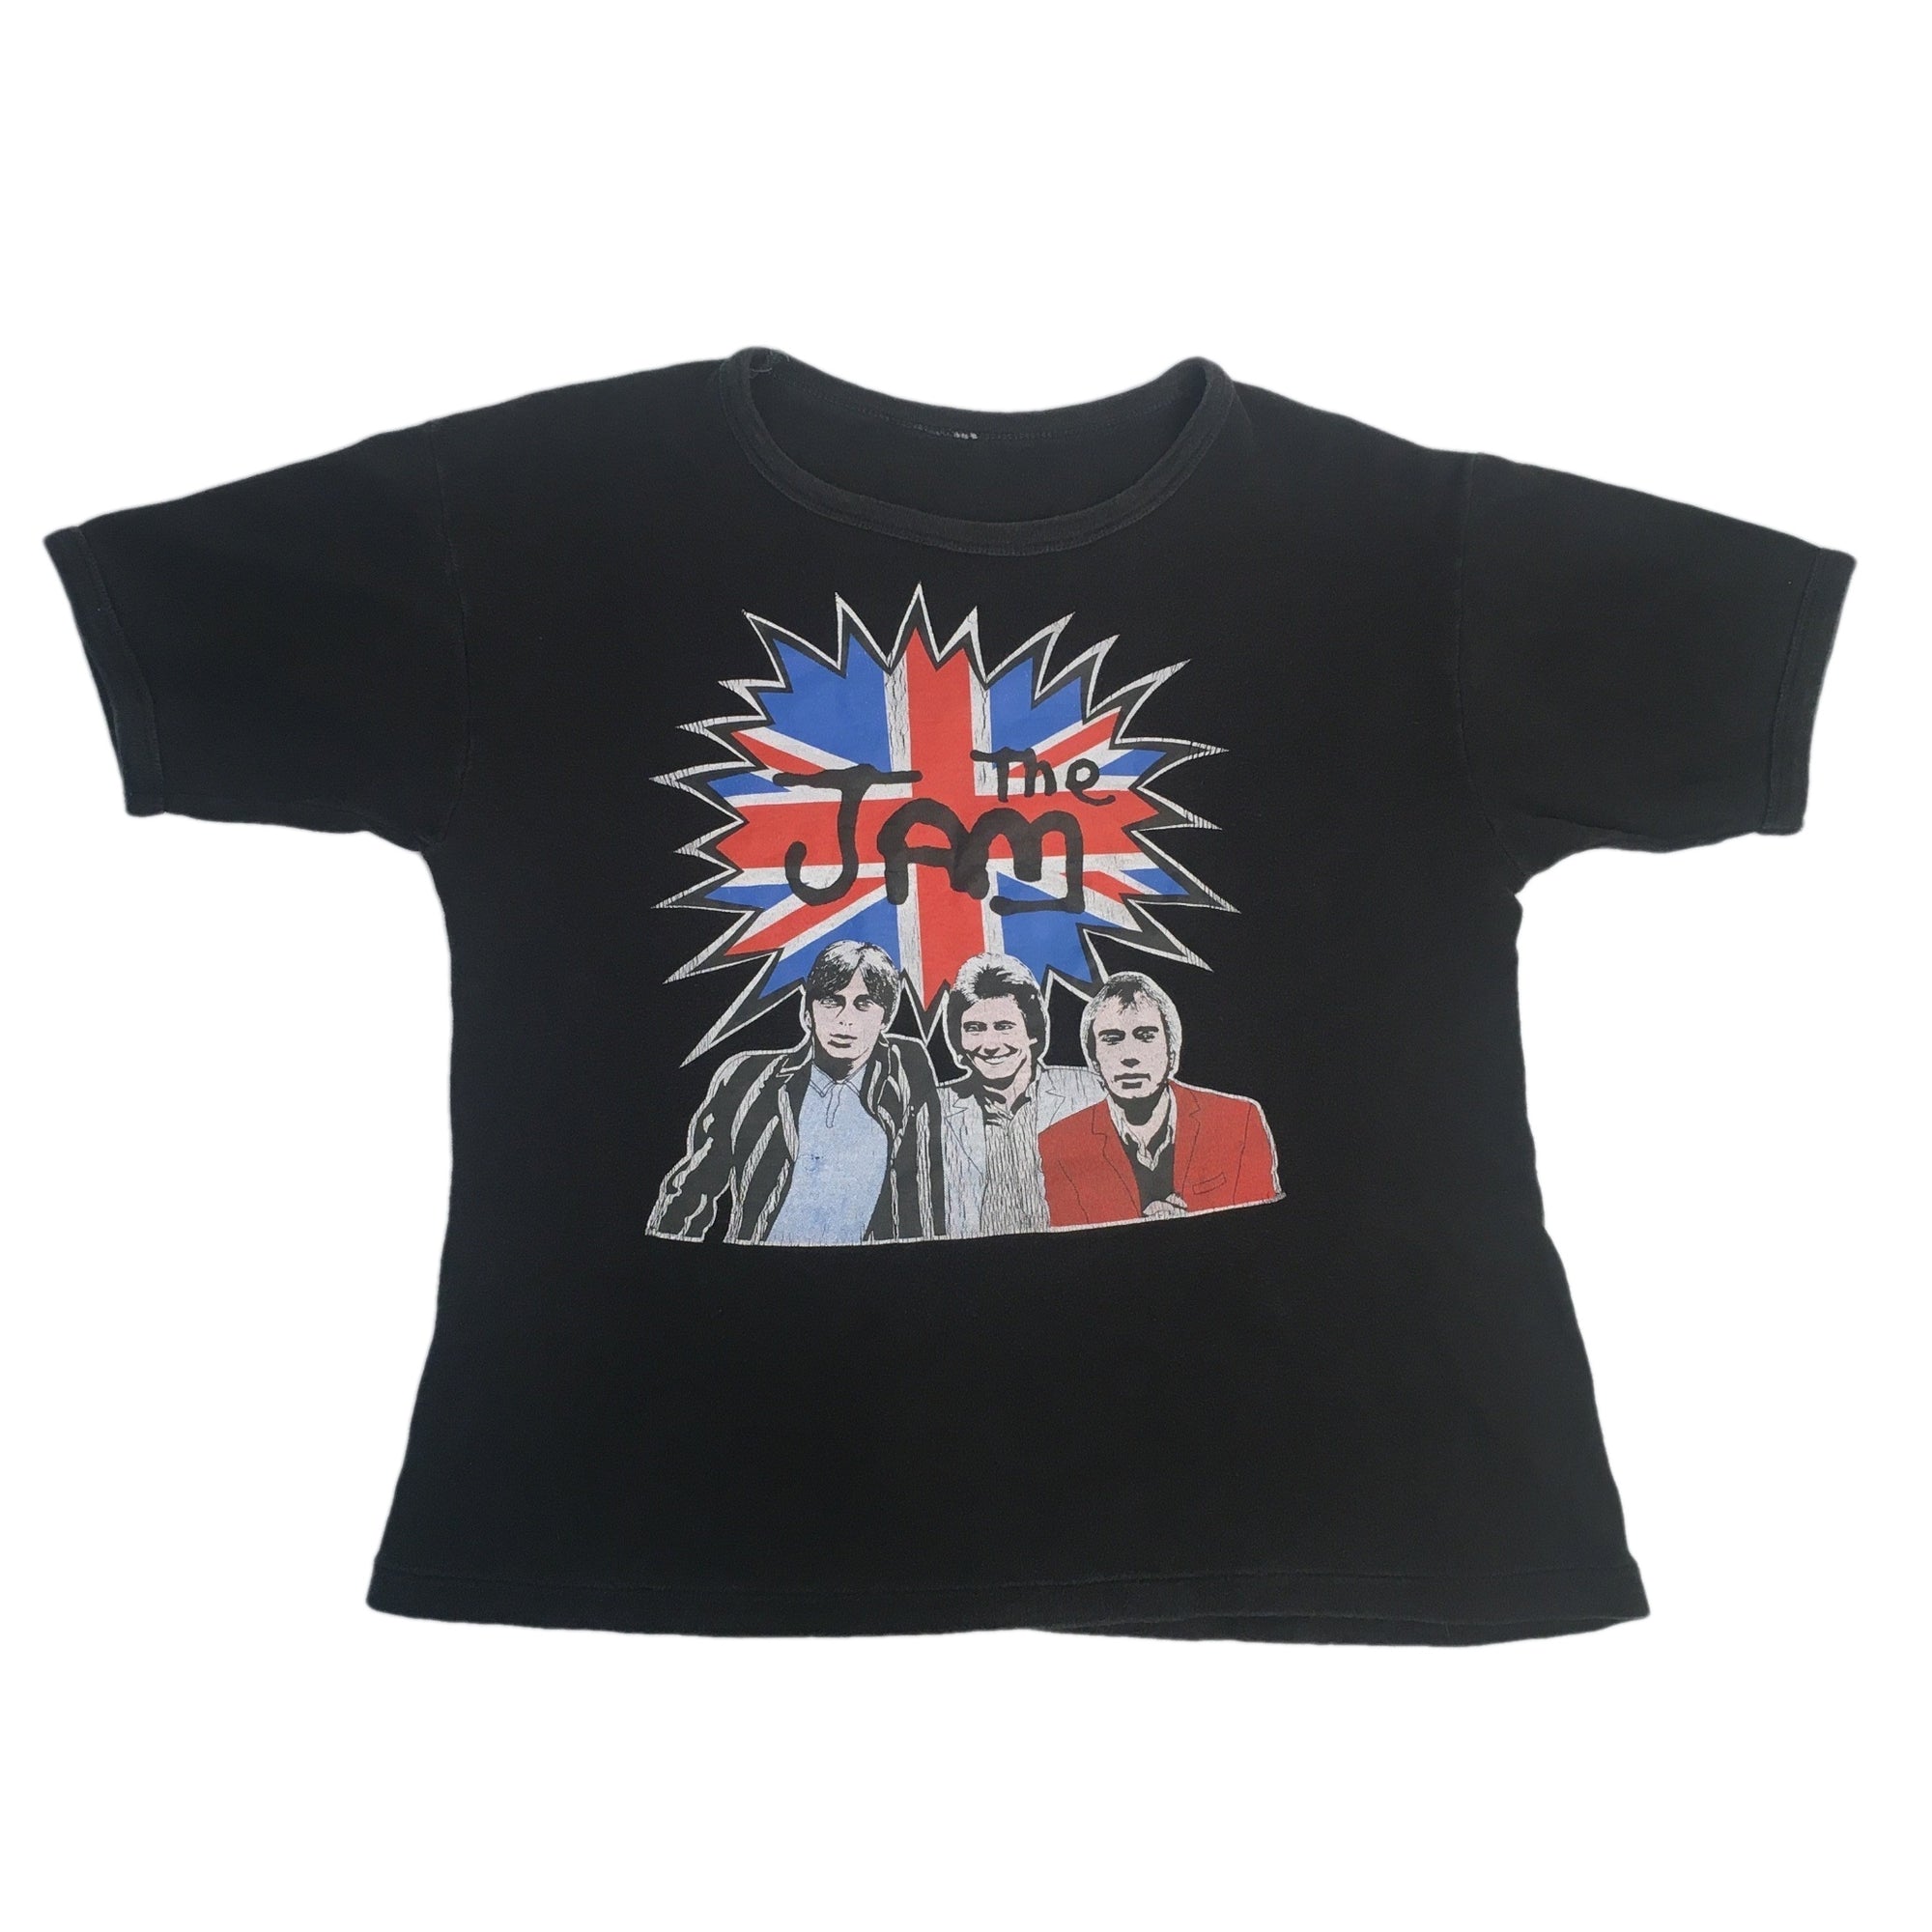 Vintage The Jam "British Flag" T-Shirt - jointcustodydc